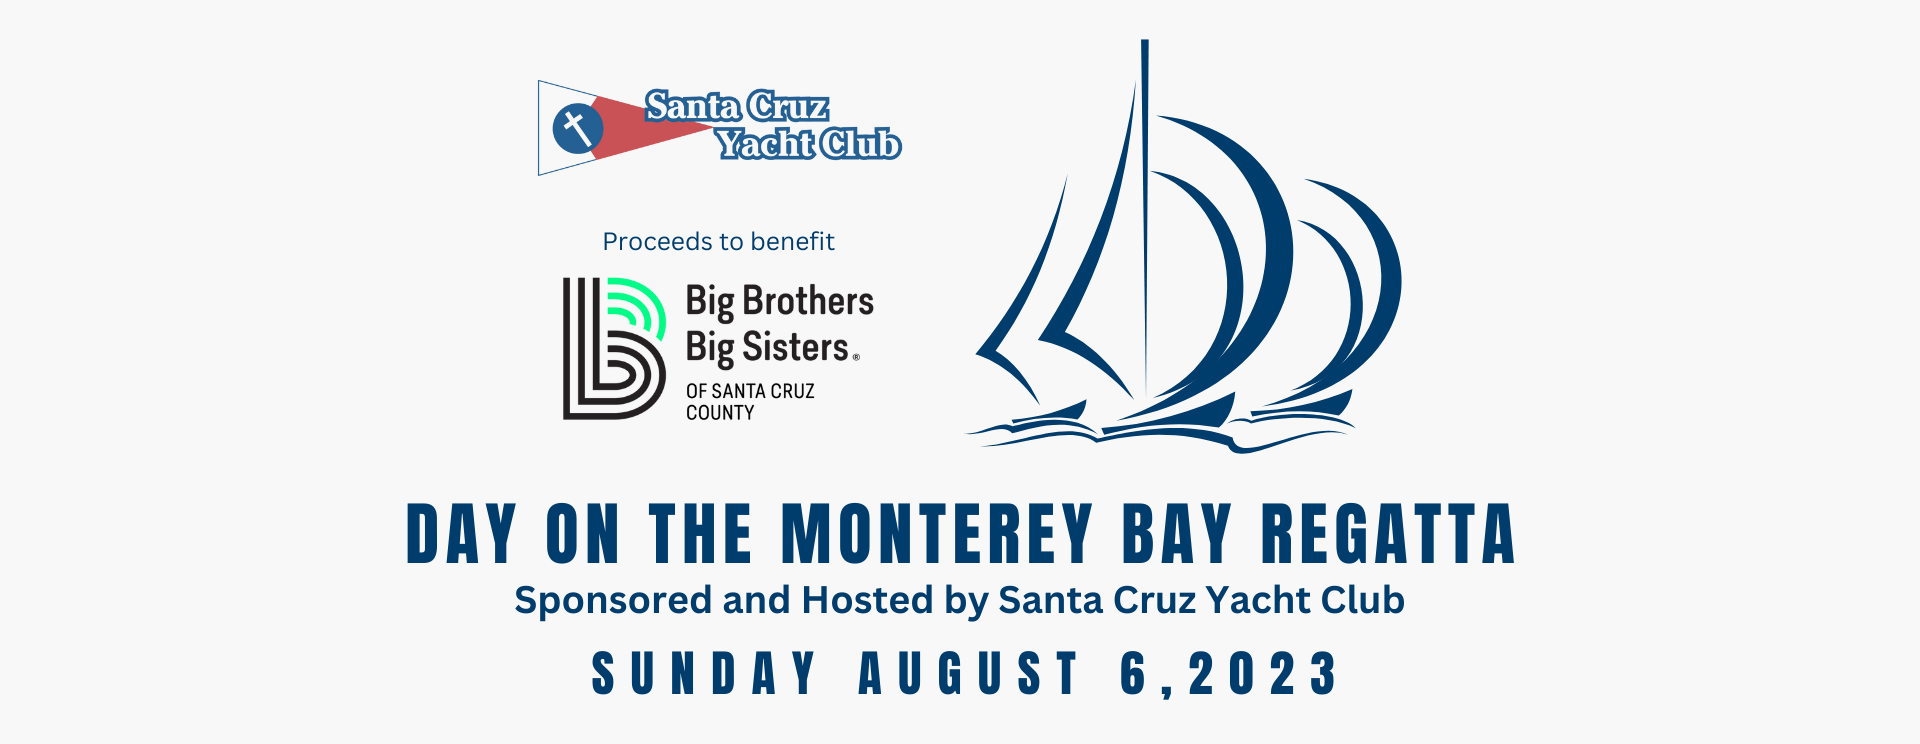 Day on the Monterey Bay Regatta 2023